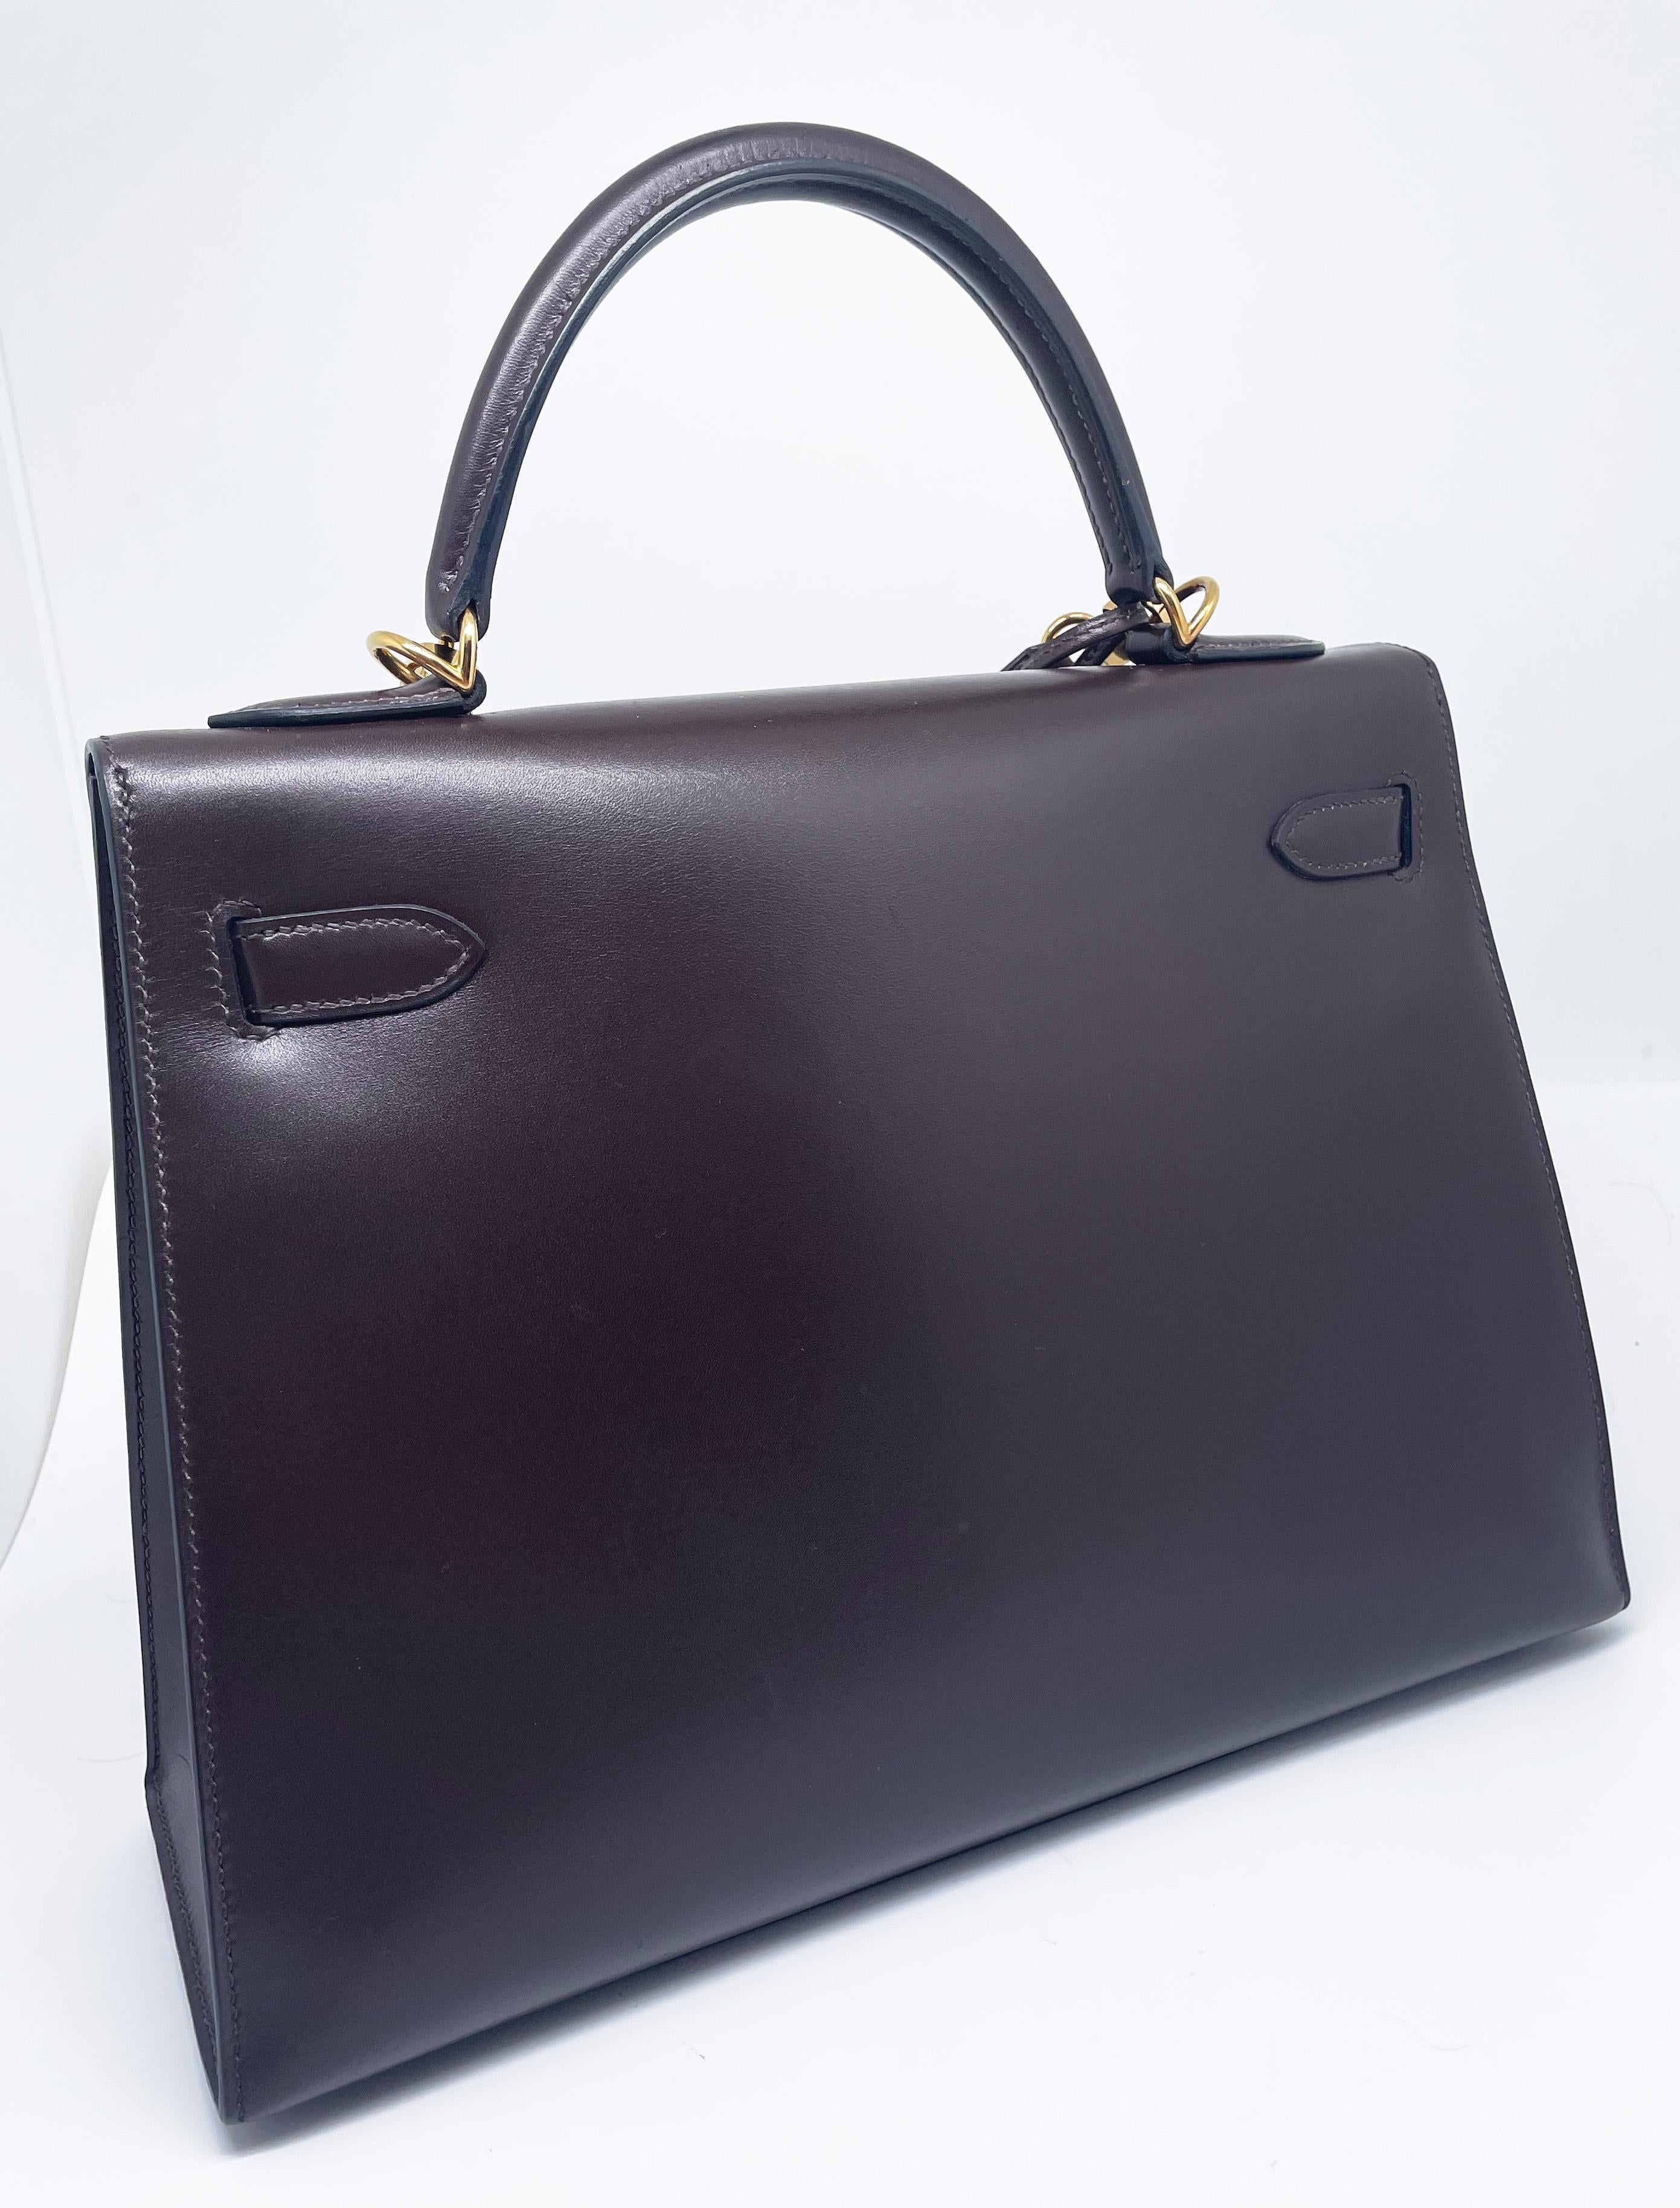 Superb Hermès Kelly saddler handbag 32 cm in brown box 1